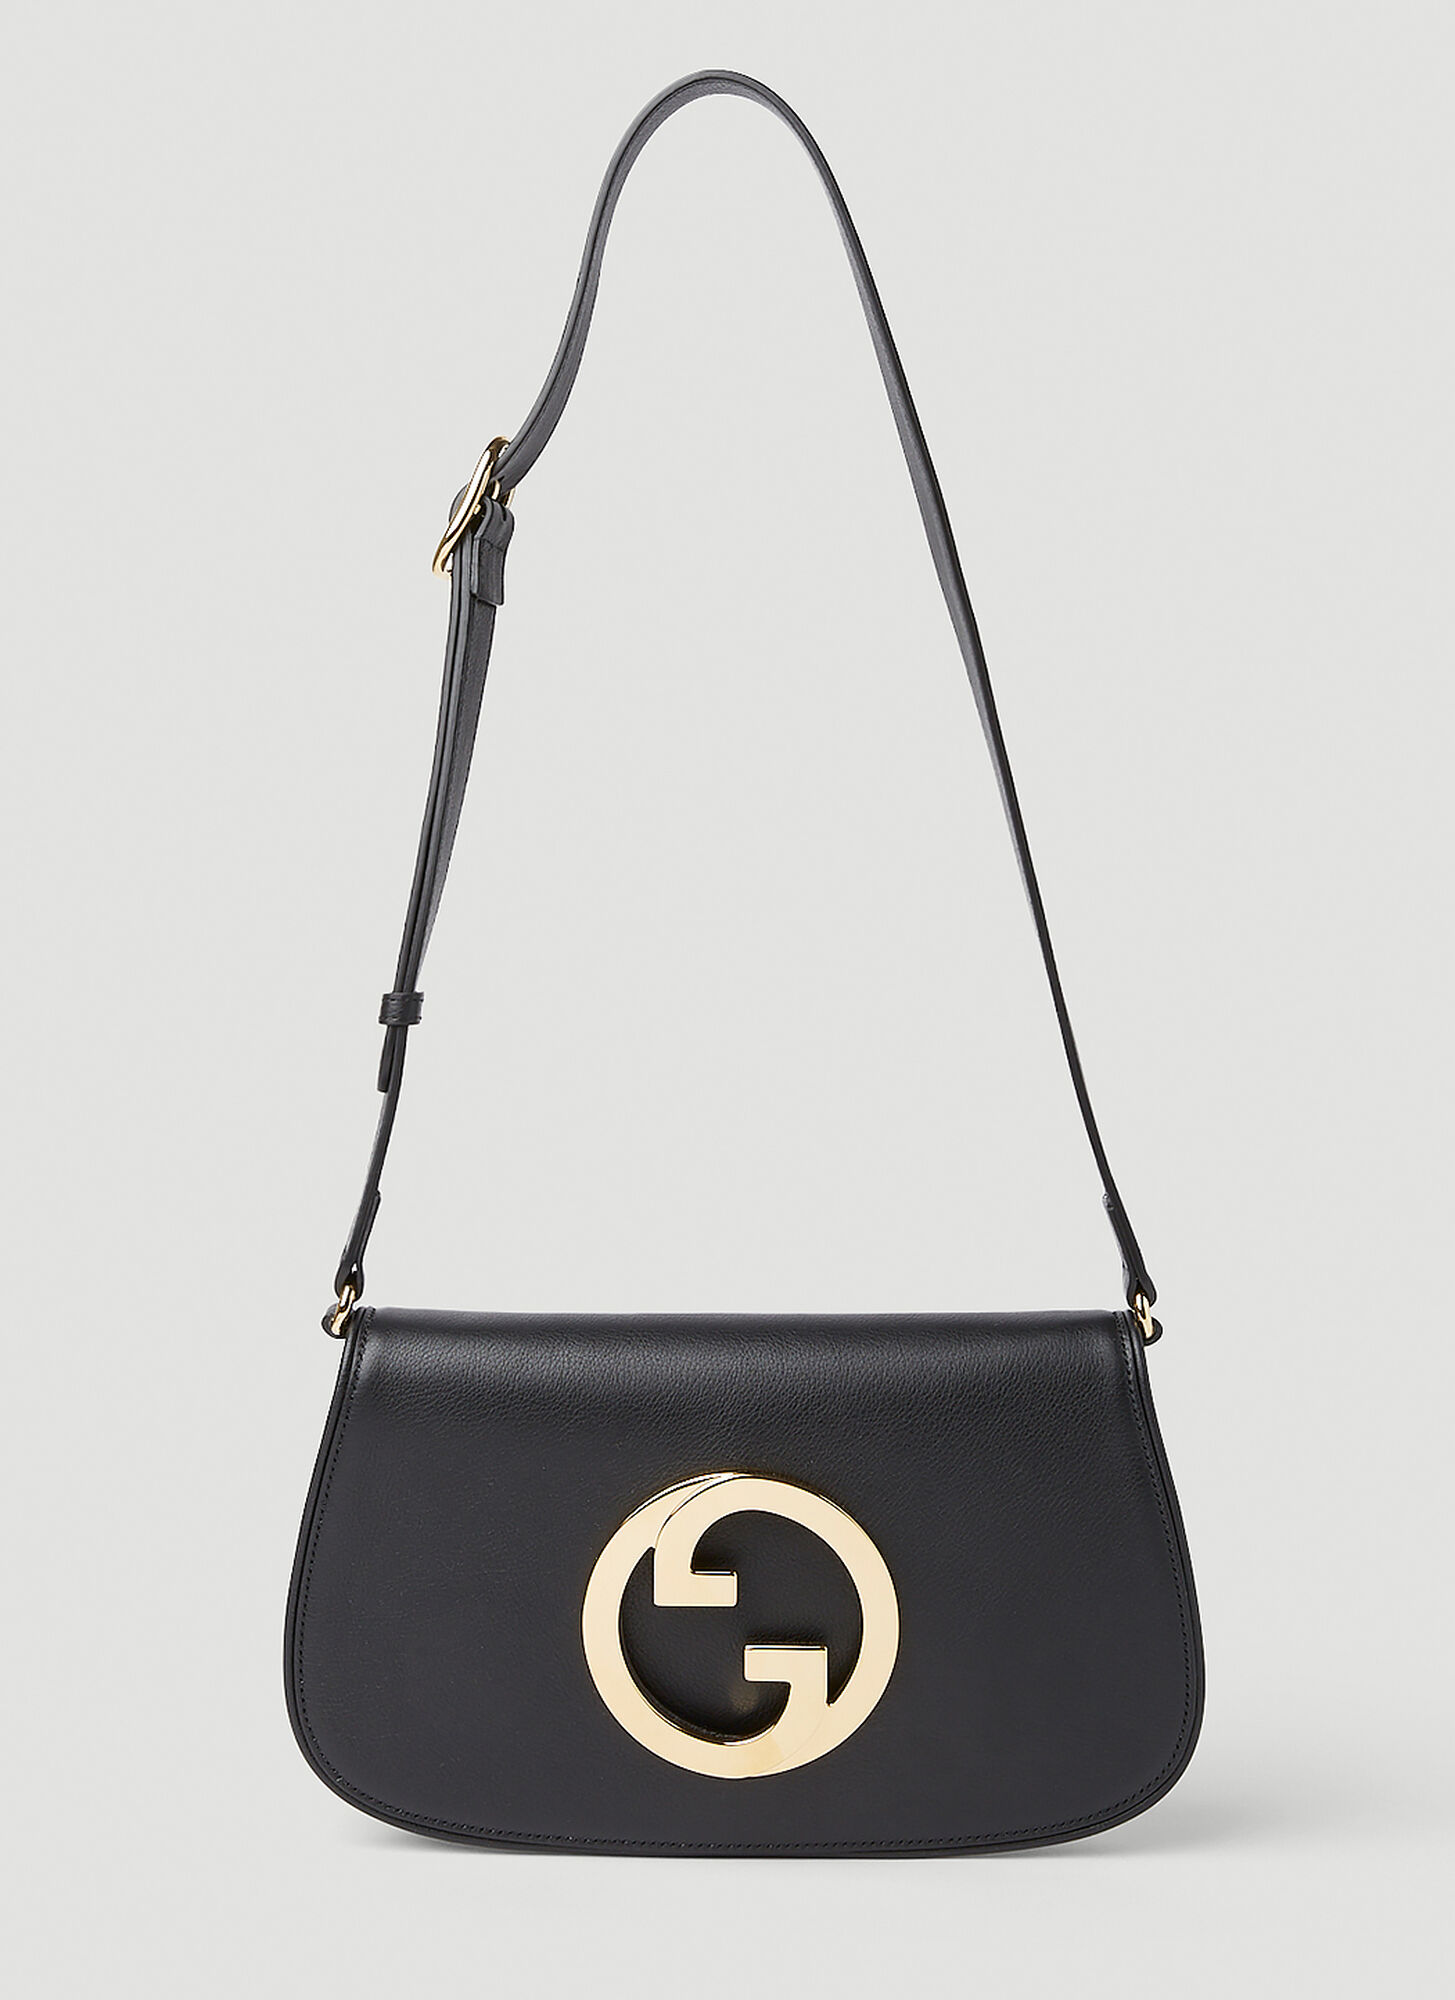 Gucci Blondie Roxy Shoulder Bag In Black